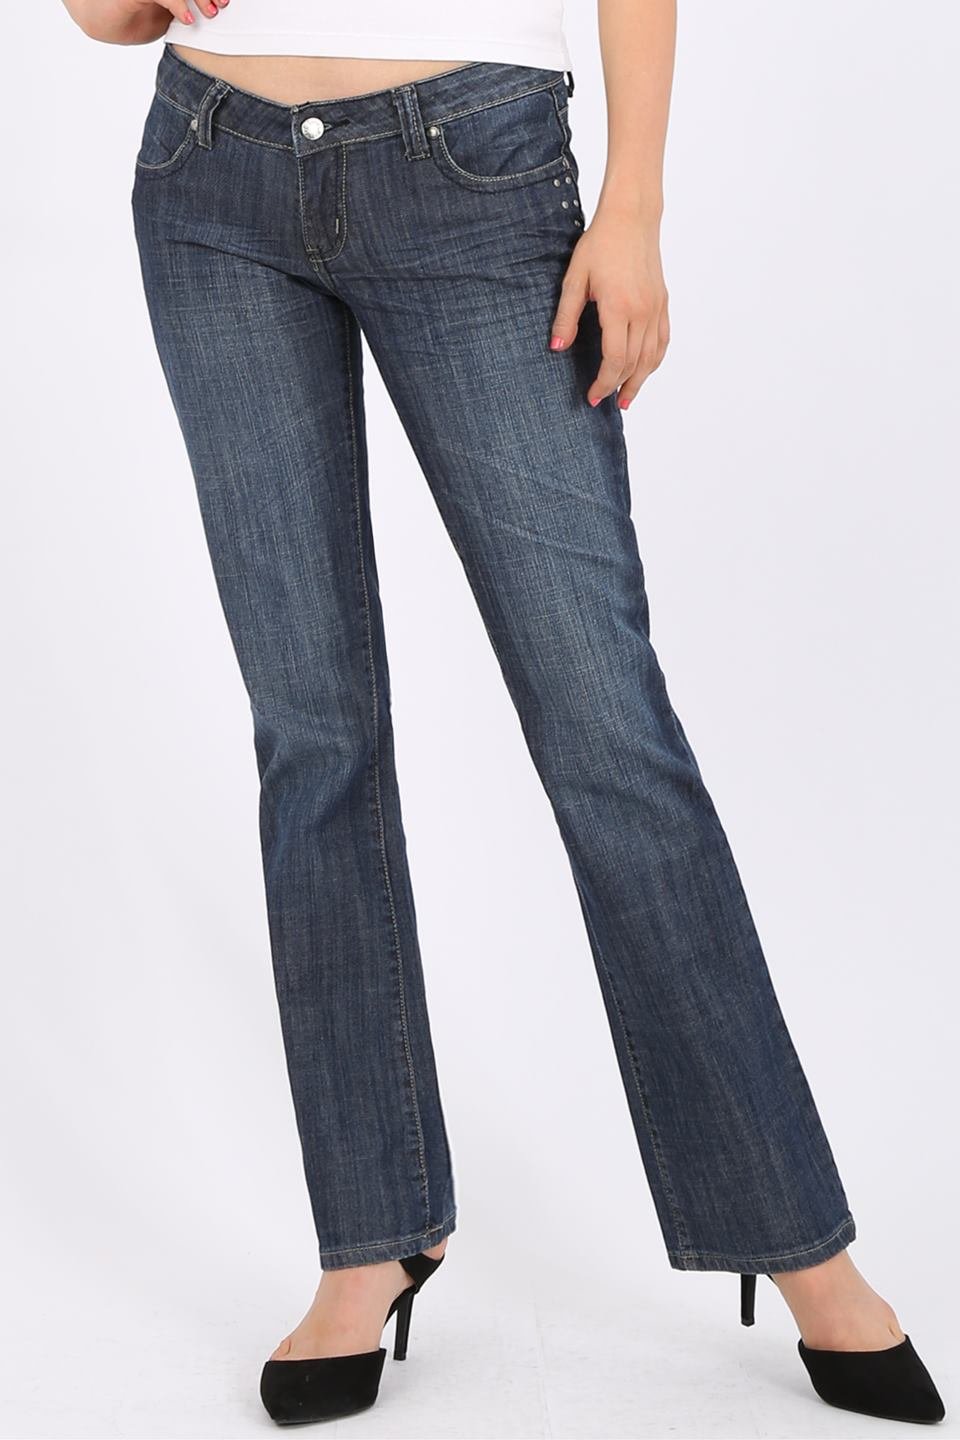 MISS PINKI Elaina bootlegs Jeans in blue